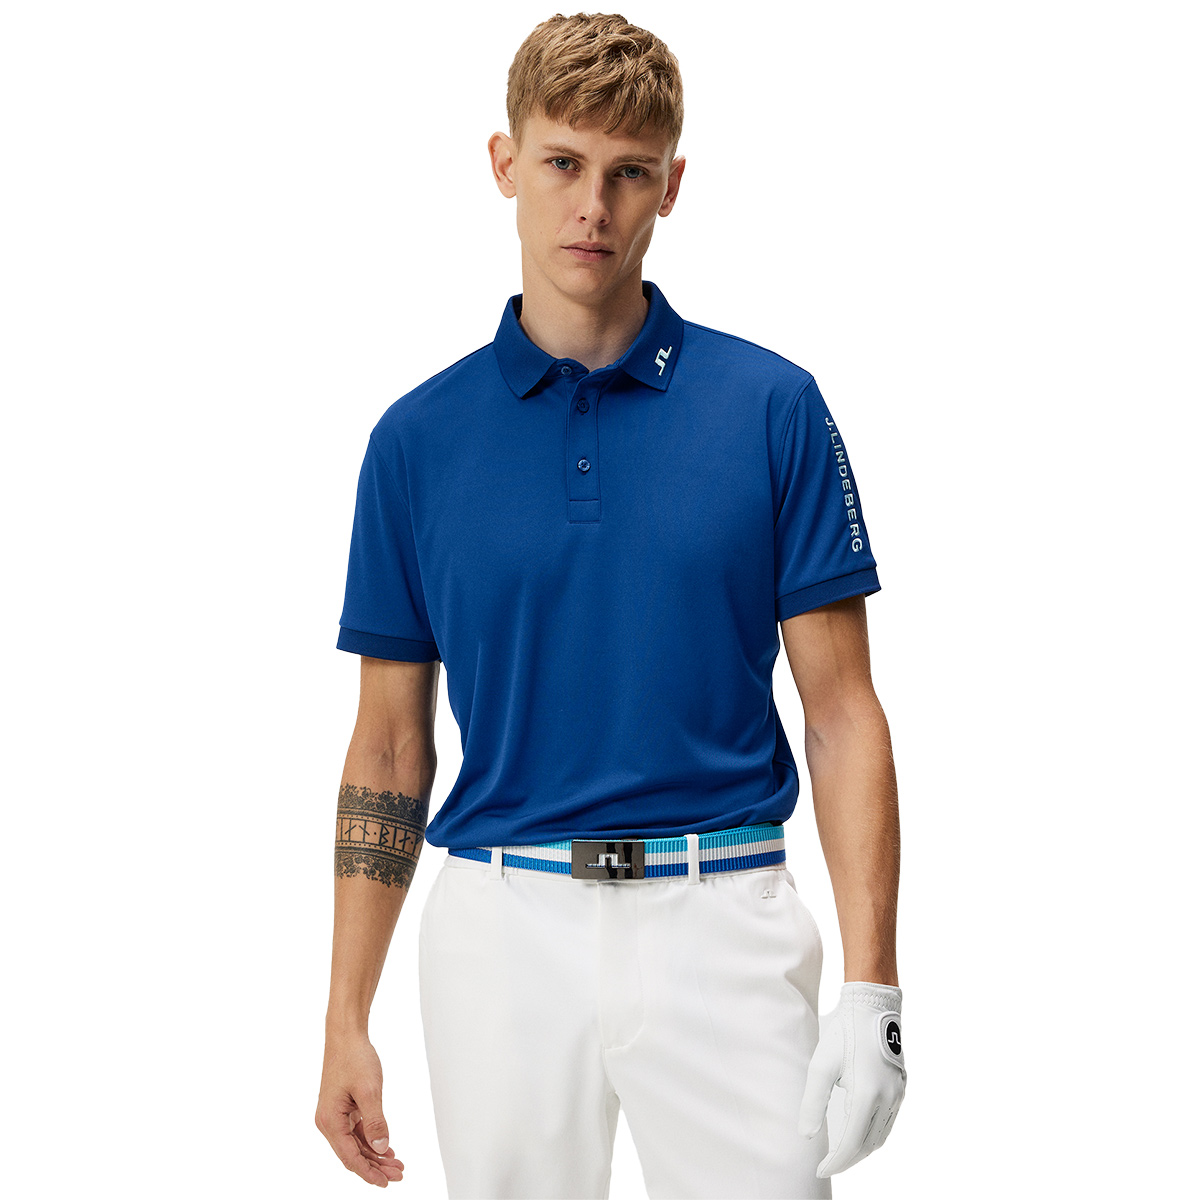 J.Lindeberg Men's Tour Tech Golf Polo Shirt from american golf